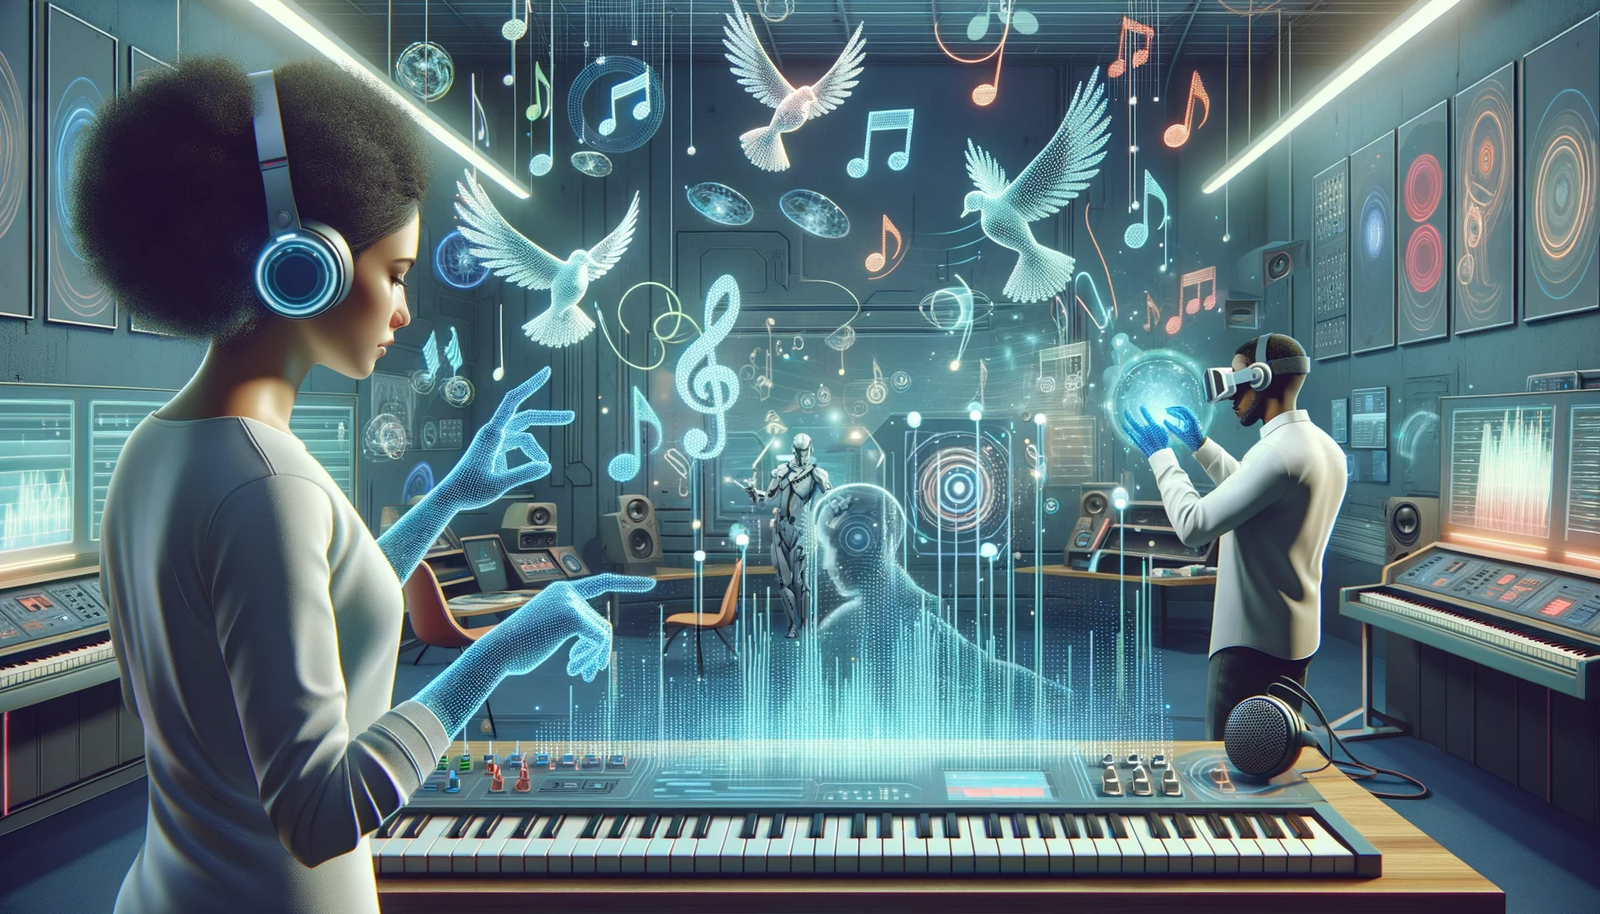 AI To Compose Music